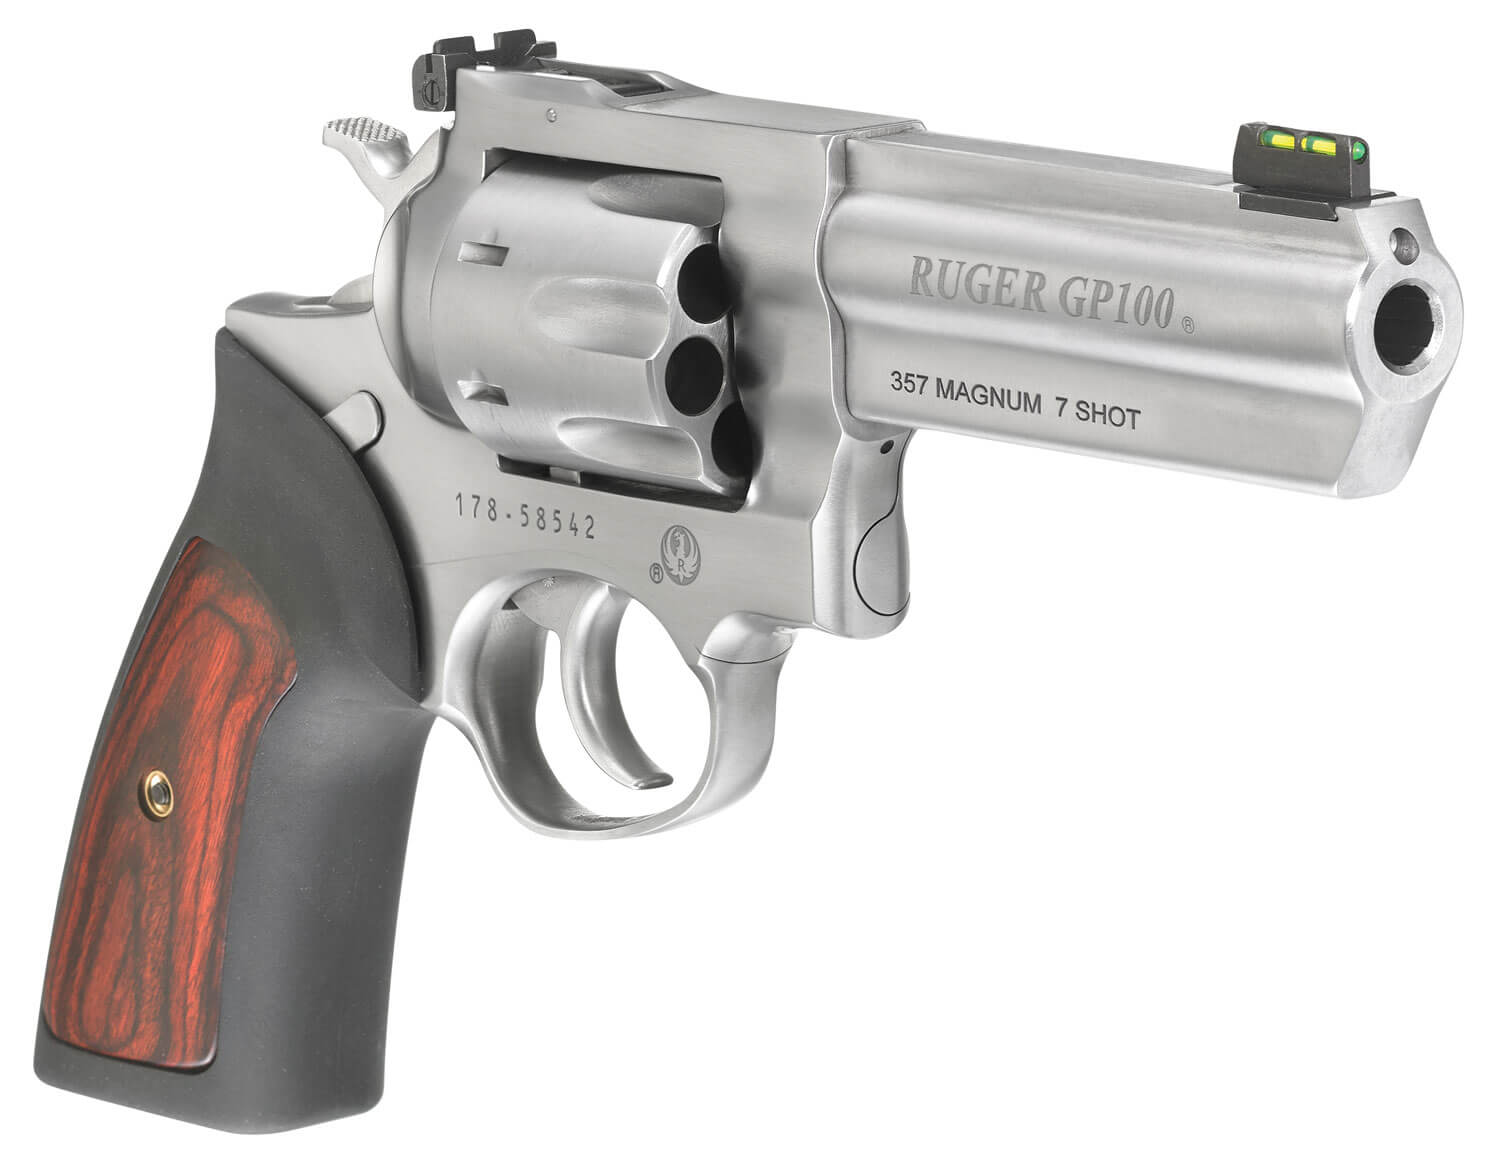 Ruger Gp100 357 Magnum Related Keywords & Suggestions - Ruge